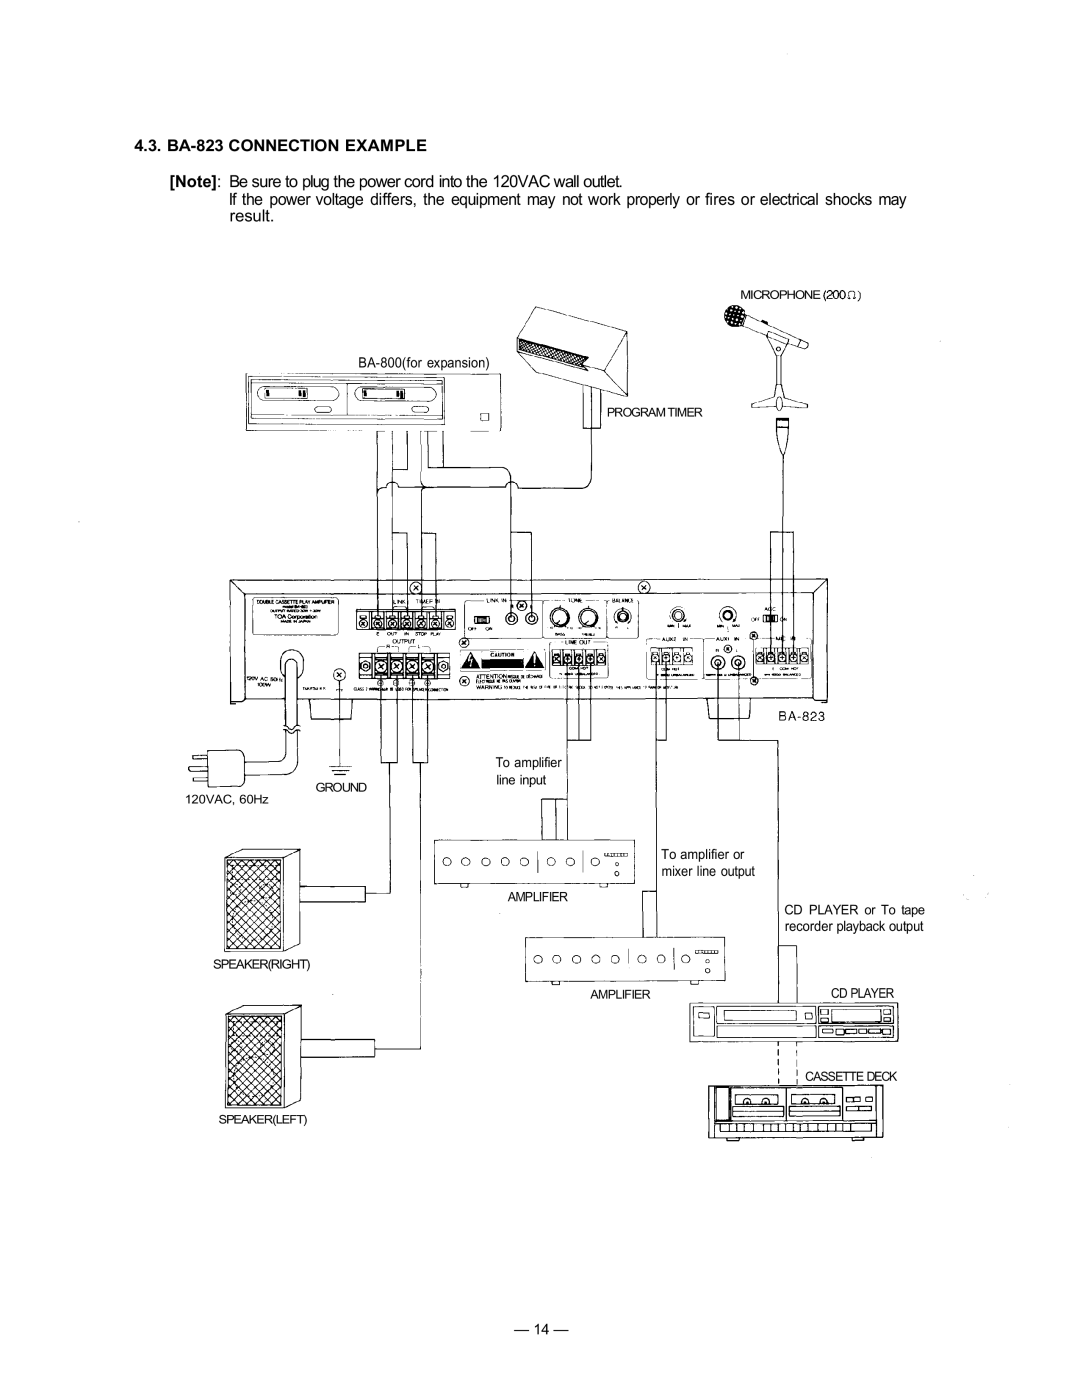 TOA Electronics manual BA-823CONNECTION EXAMPLE, BA-800forexpansion, mixer line output, recorder playback output 